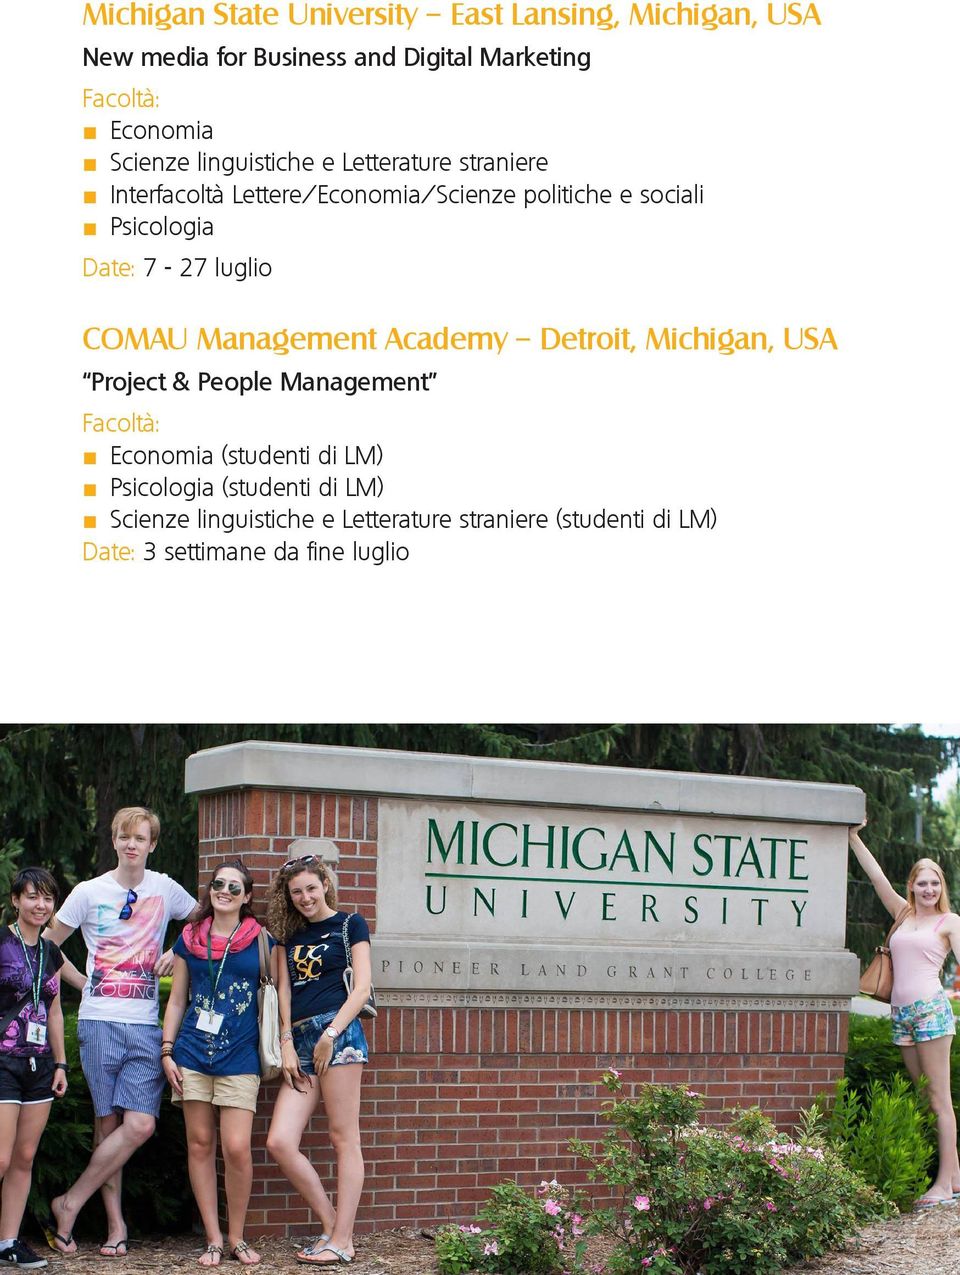 7-27 luglio COMAU Management Academy Detroit, Michigan, USA Project & People